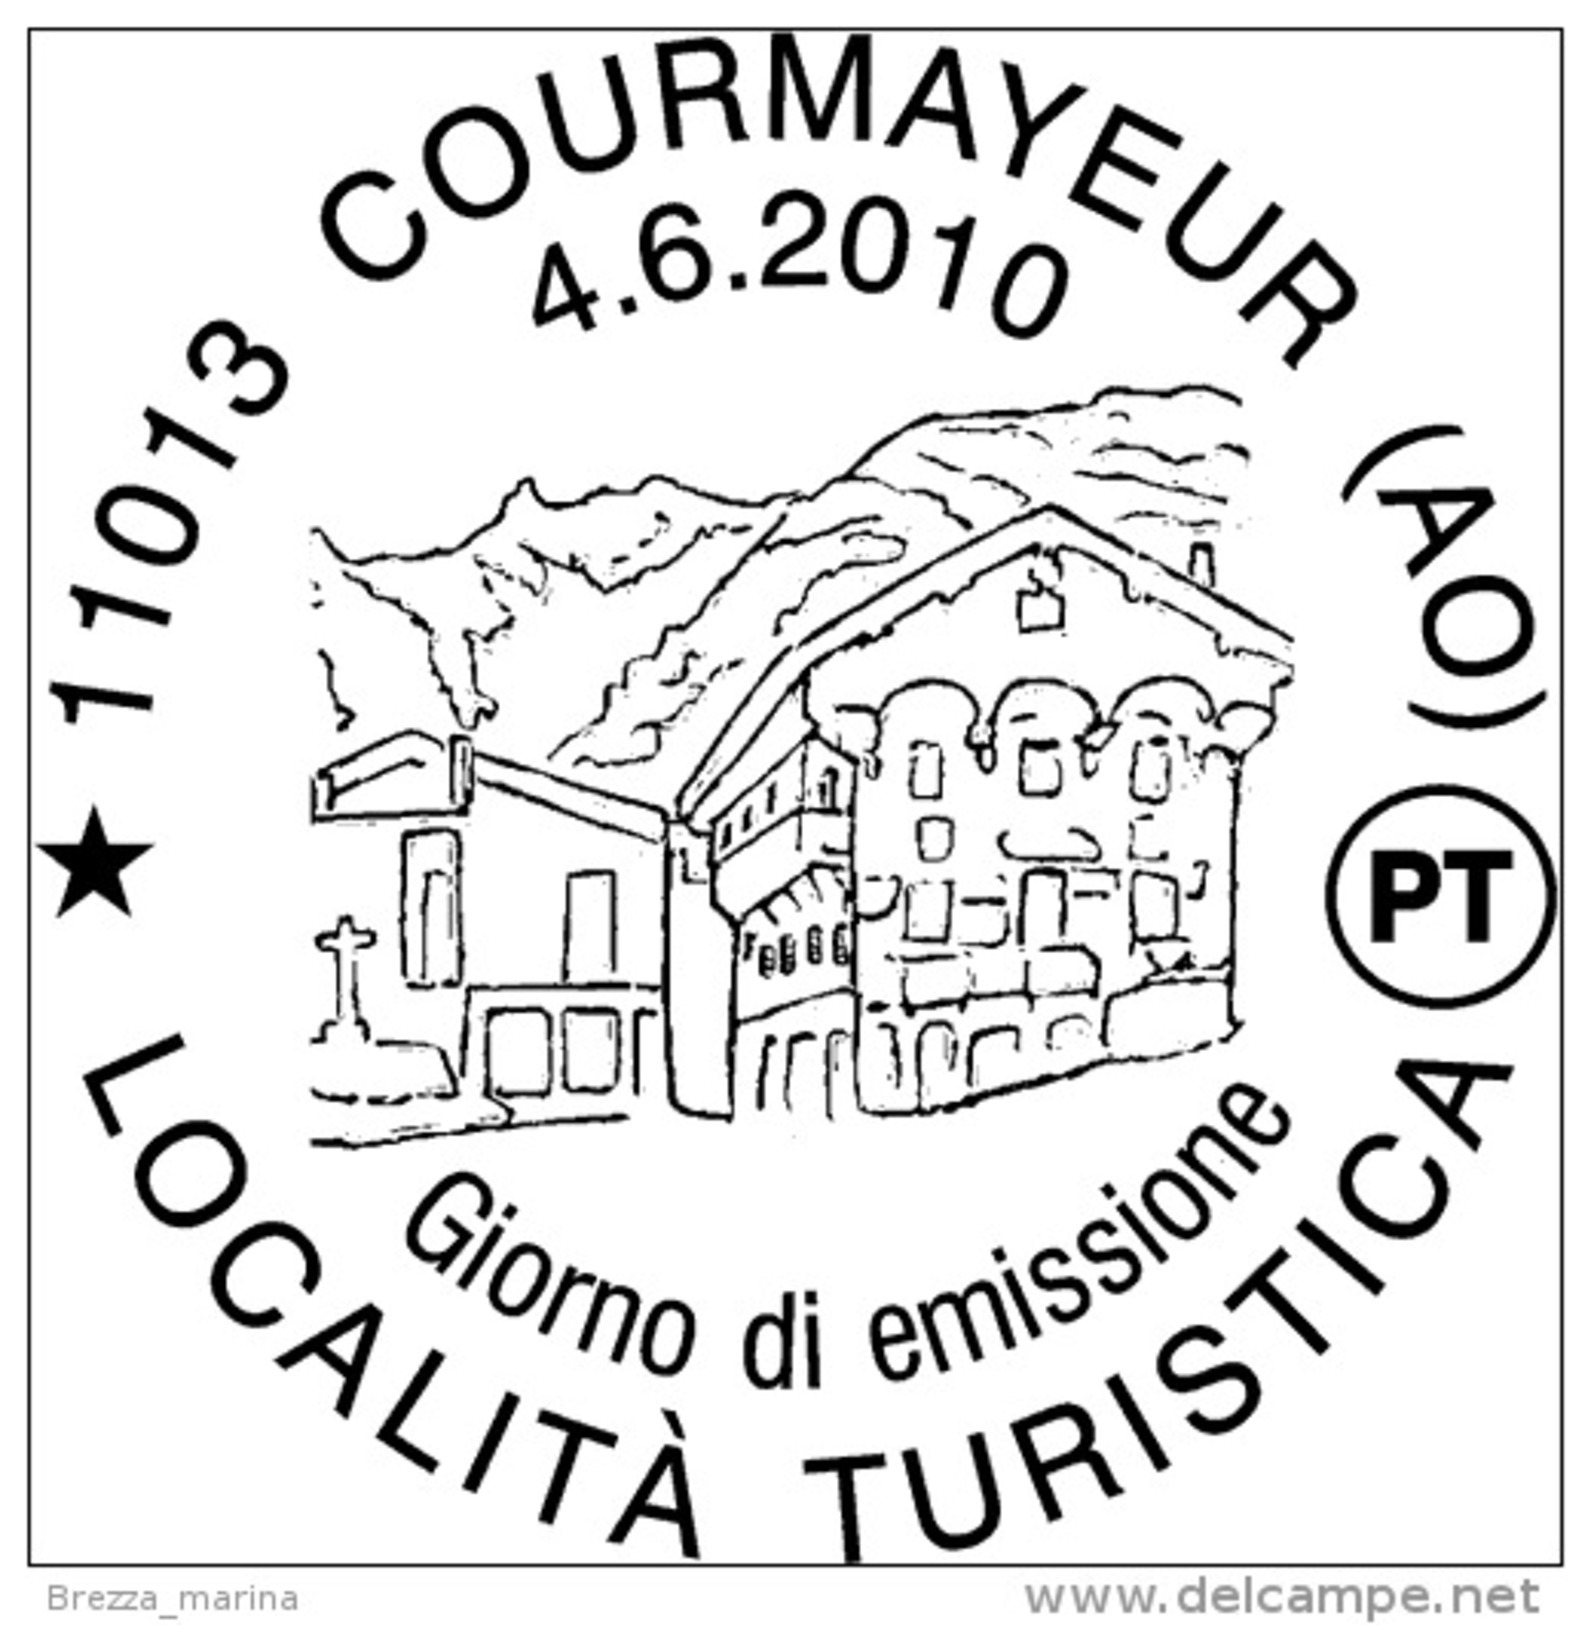 ITALIA - Usato - 2010 - Turismo - Courmayeur (AO) - 0,60 - 2001-10: Usati